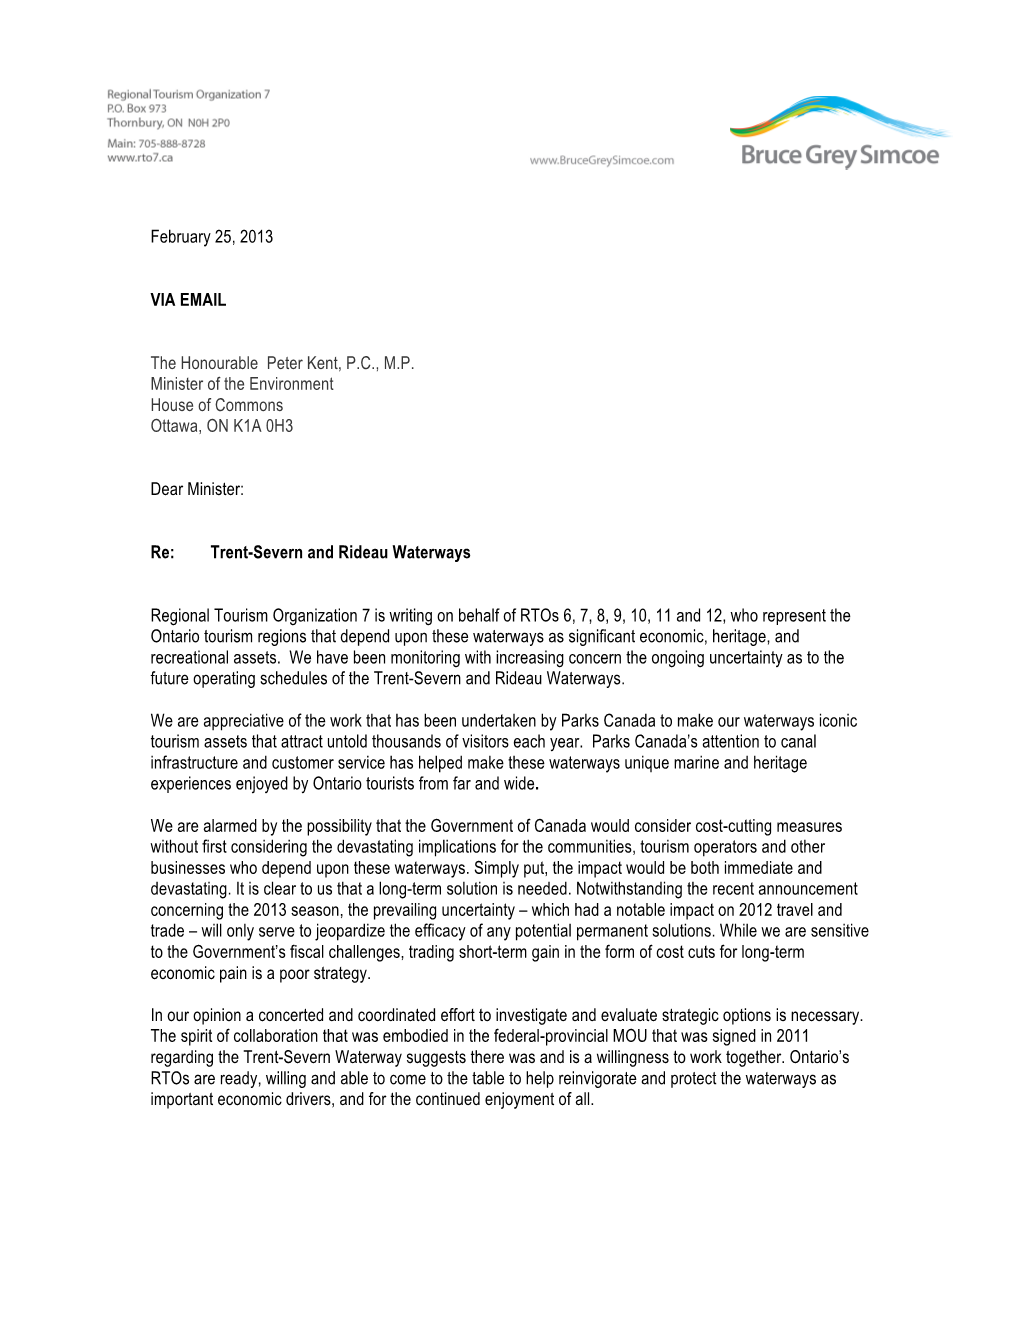 Rtos Trent Severn Rideau Letter Feb 25 2013